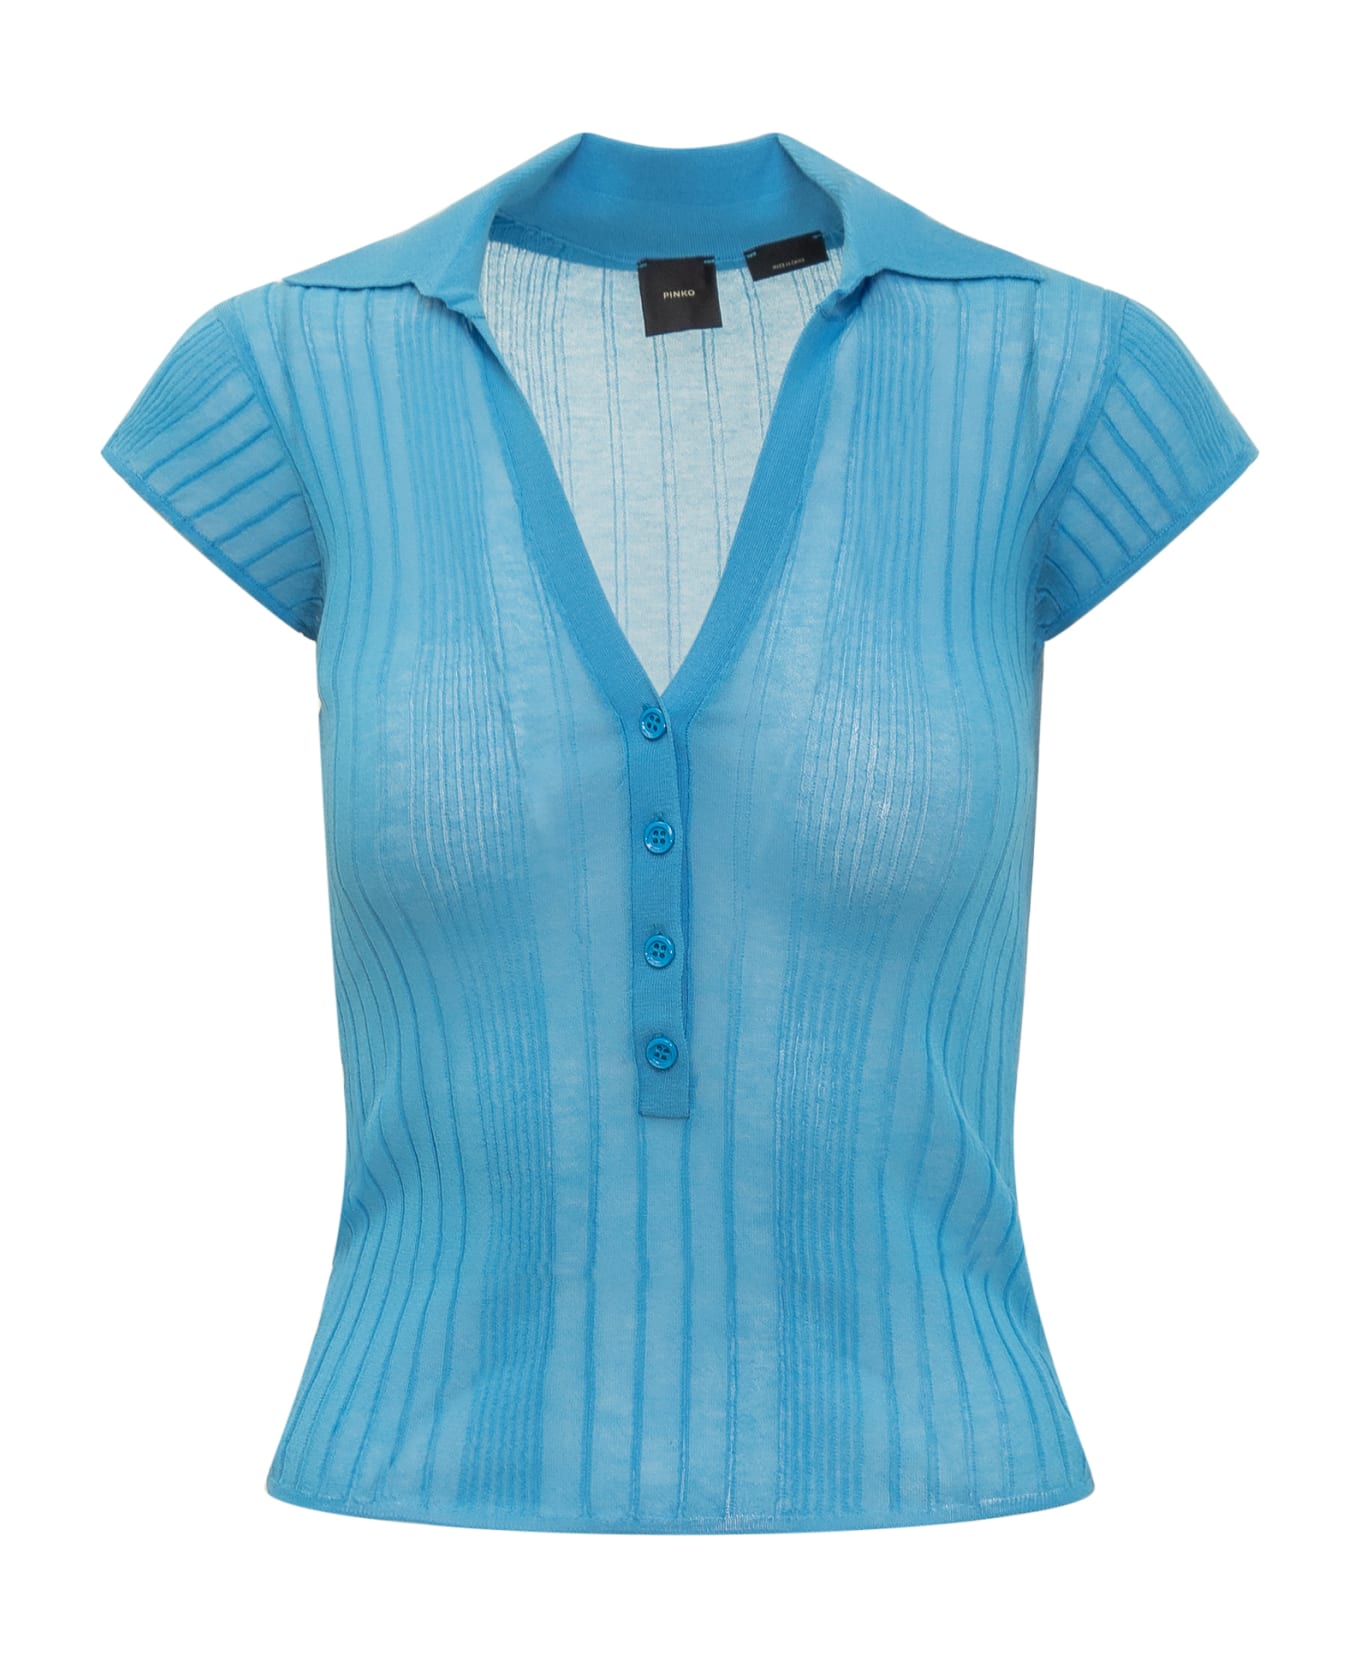 Pinko Laguna Blu Polo Shirt - AZZURRO CIELO ポロシャツ